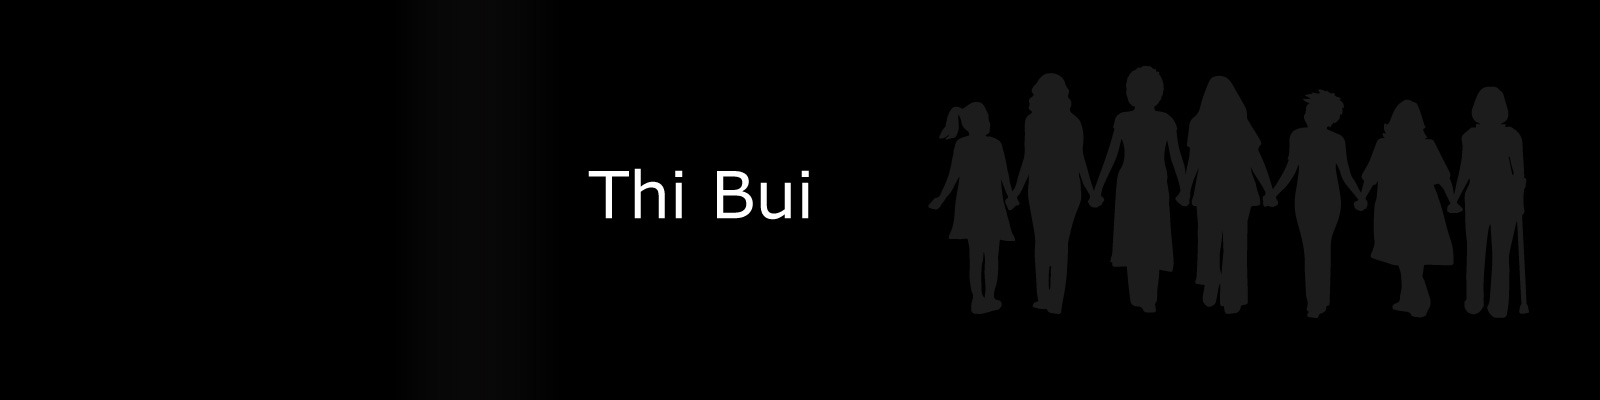 Photo of Thi Bui.